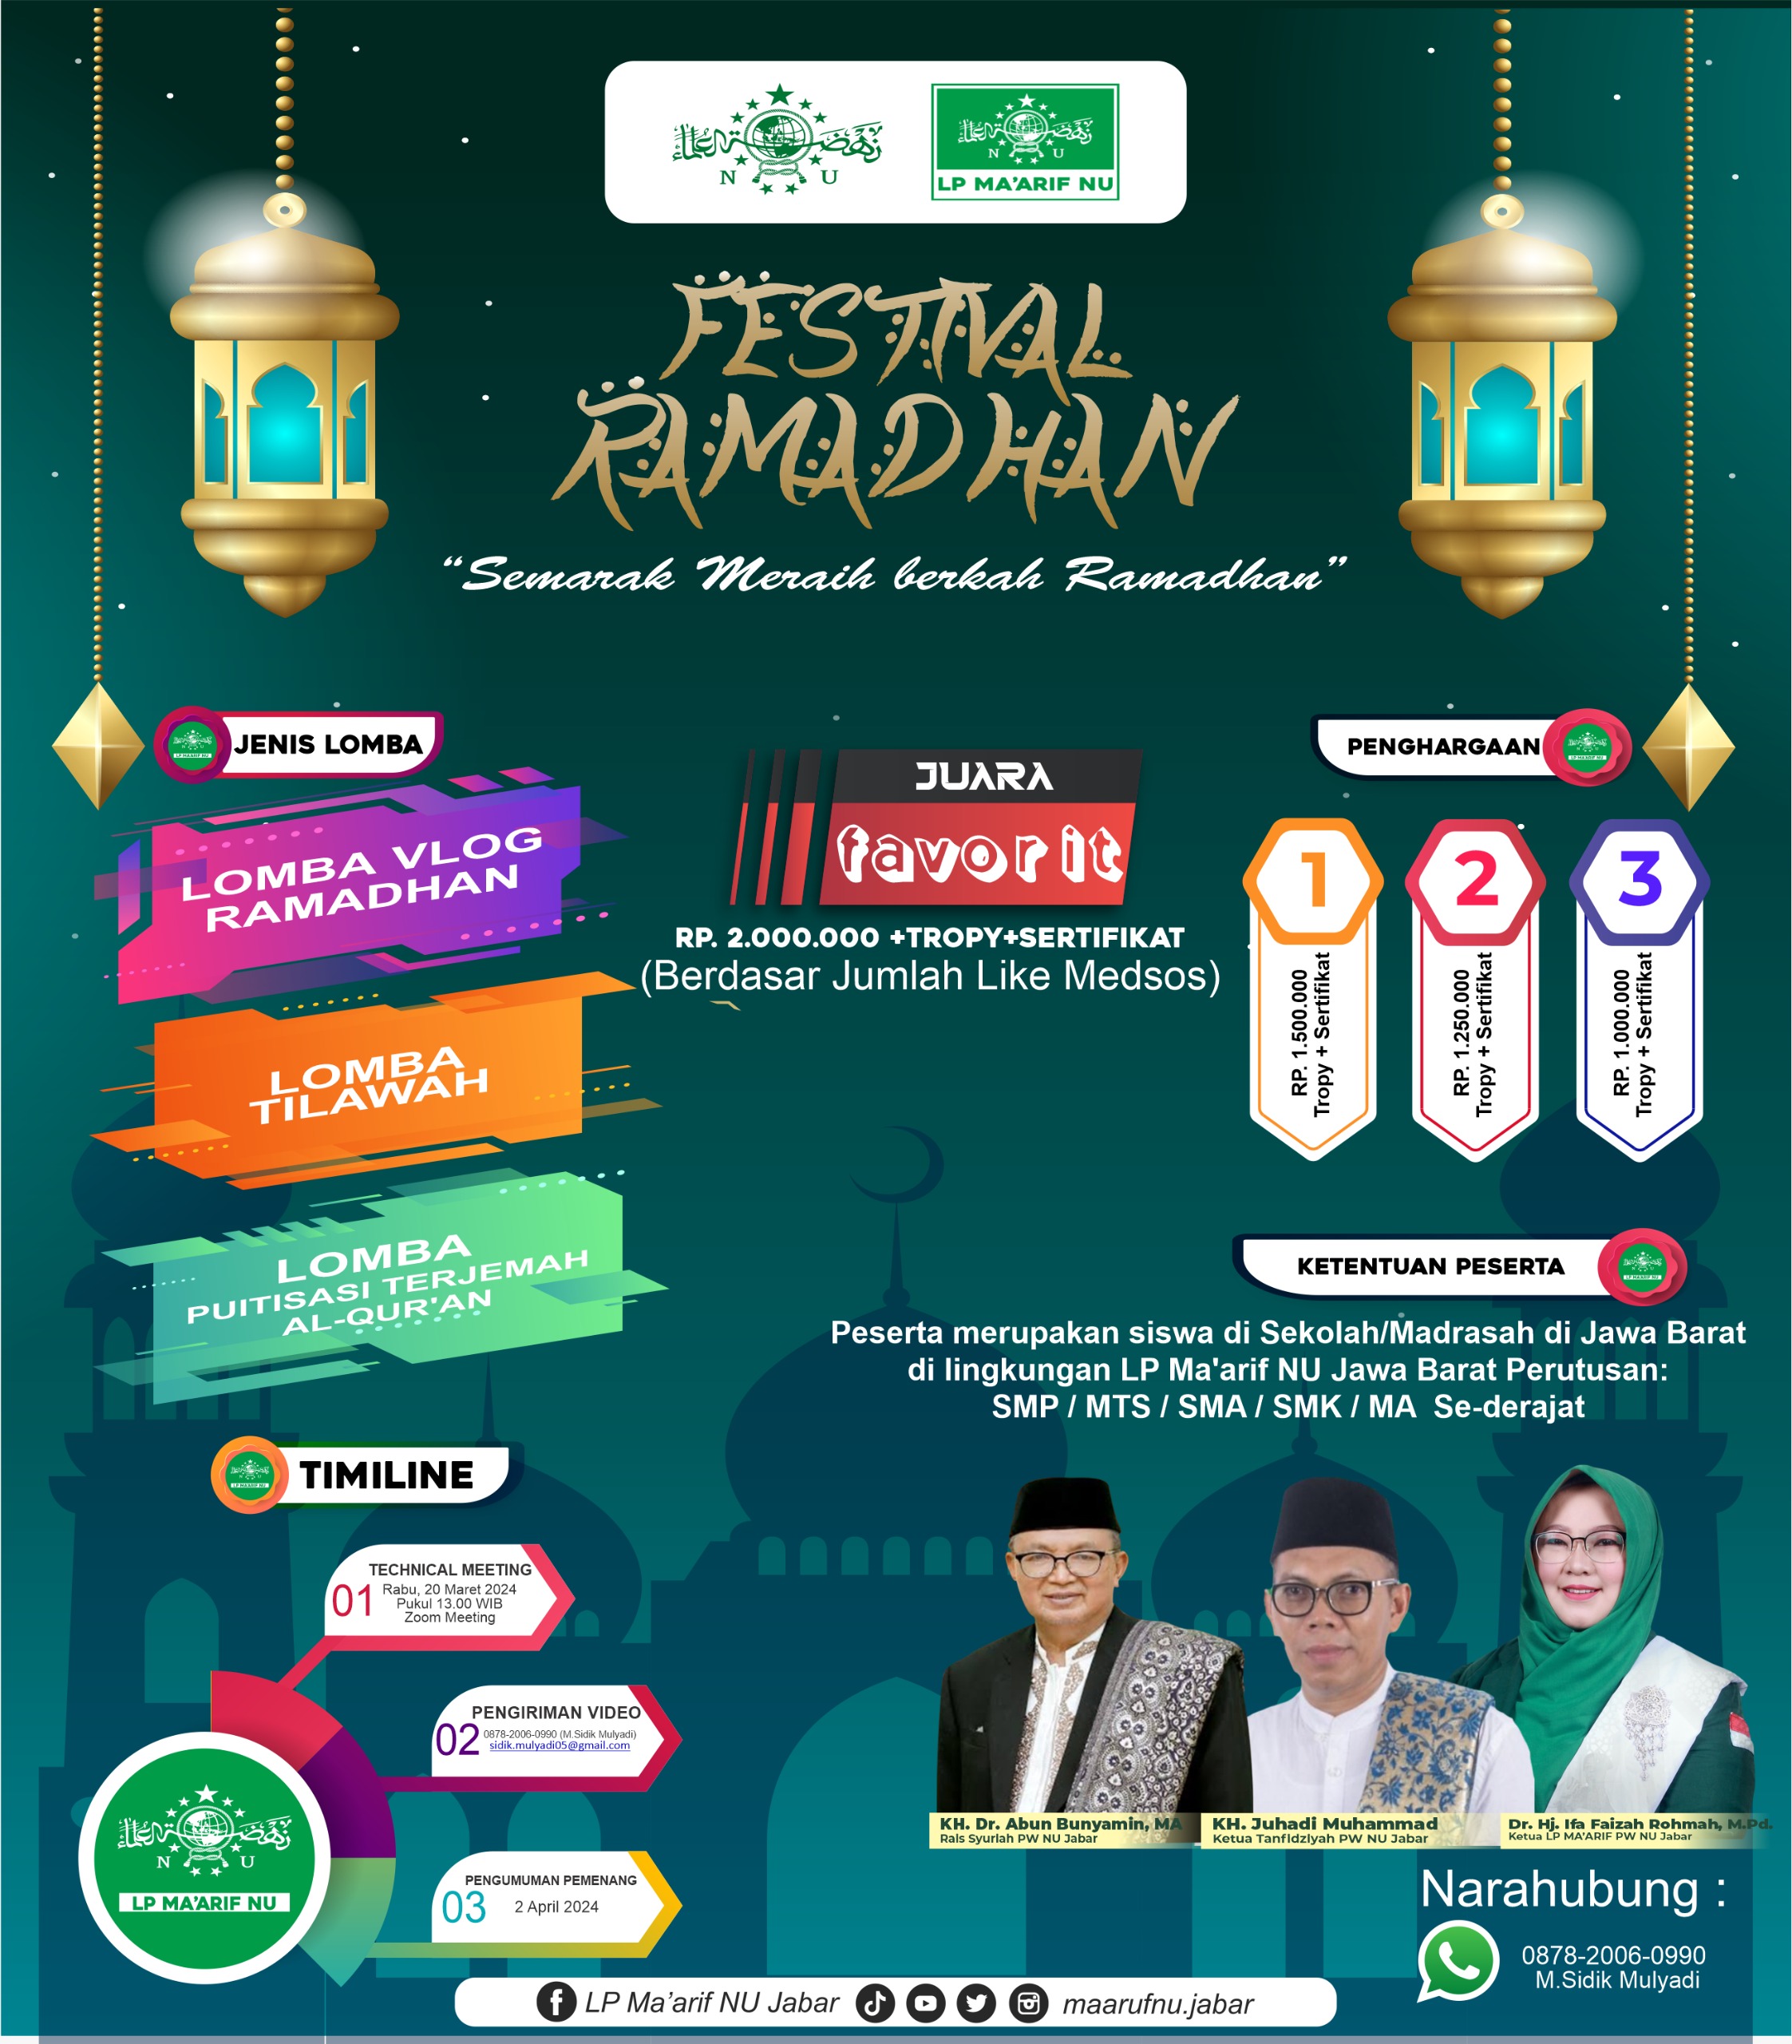 Festival Ramadhan Bersama Teh Ifa LP Ma’arif PWNU Jawa Barat